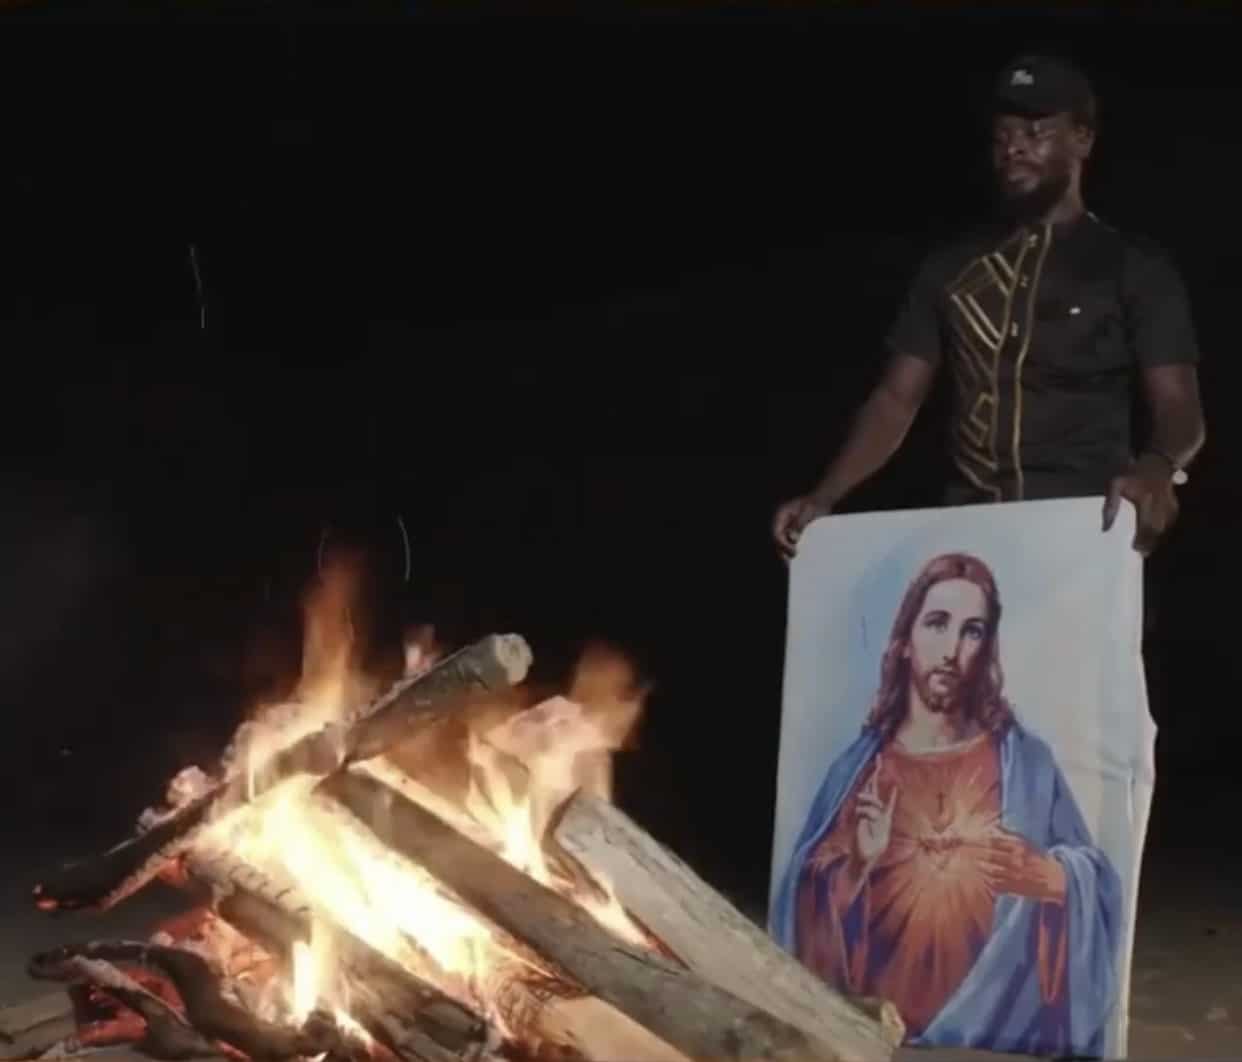 Fuse ODG burns painting of Jesus Christ